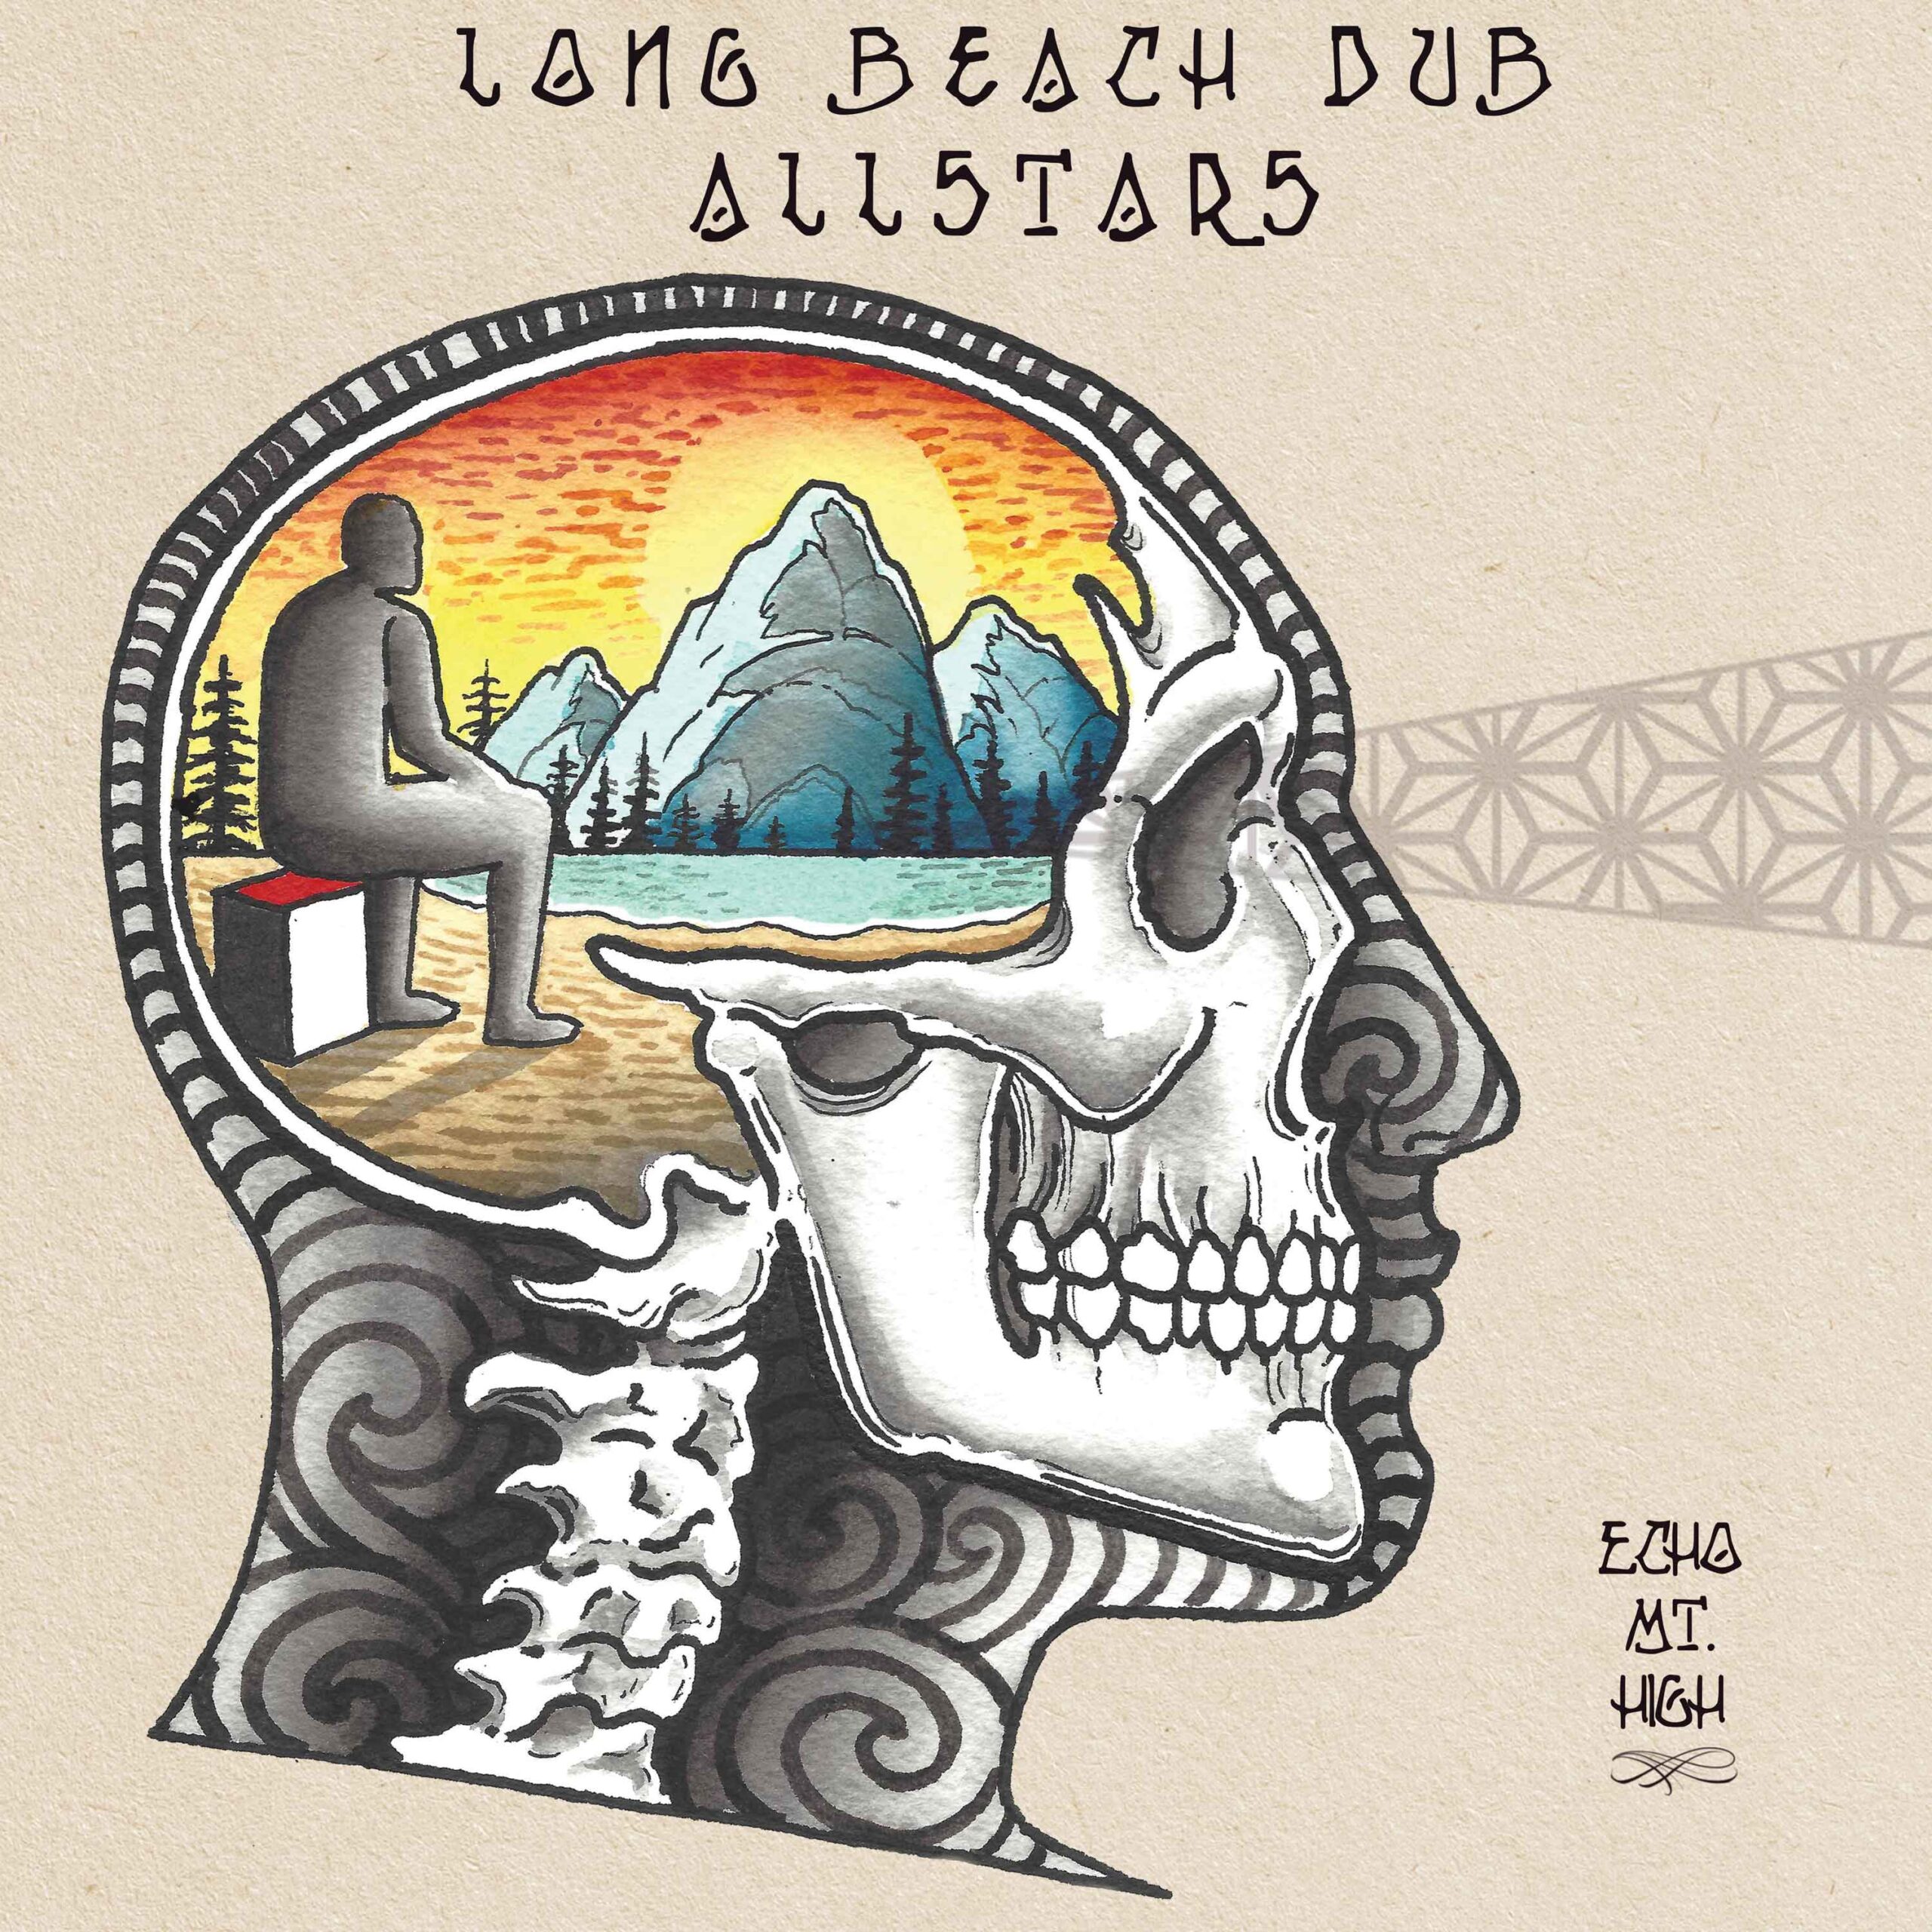 Long Beach Dub Allstars Return With New Album The Pier Magazine